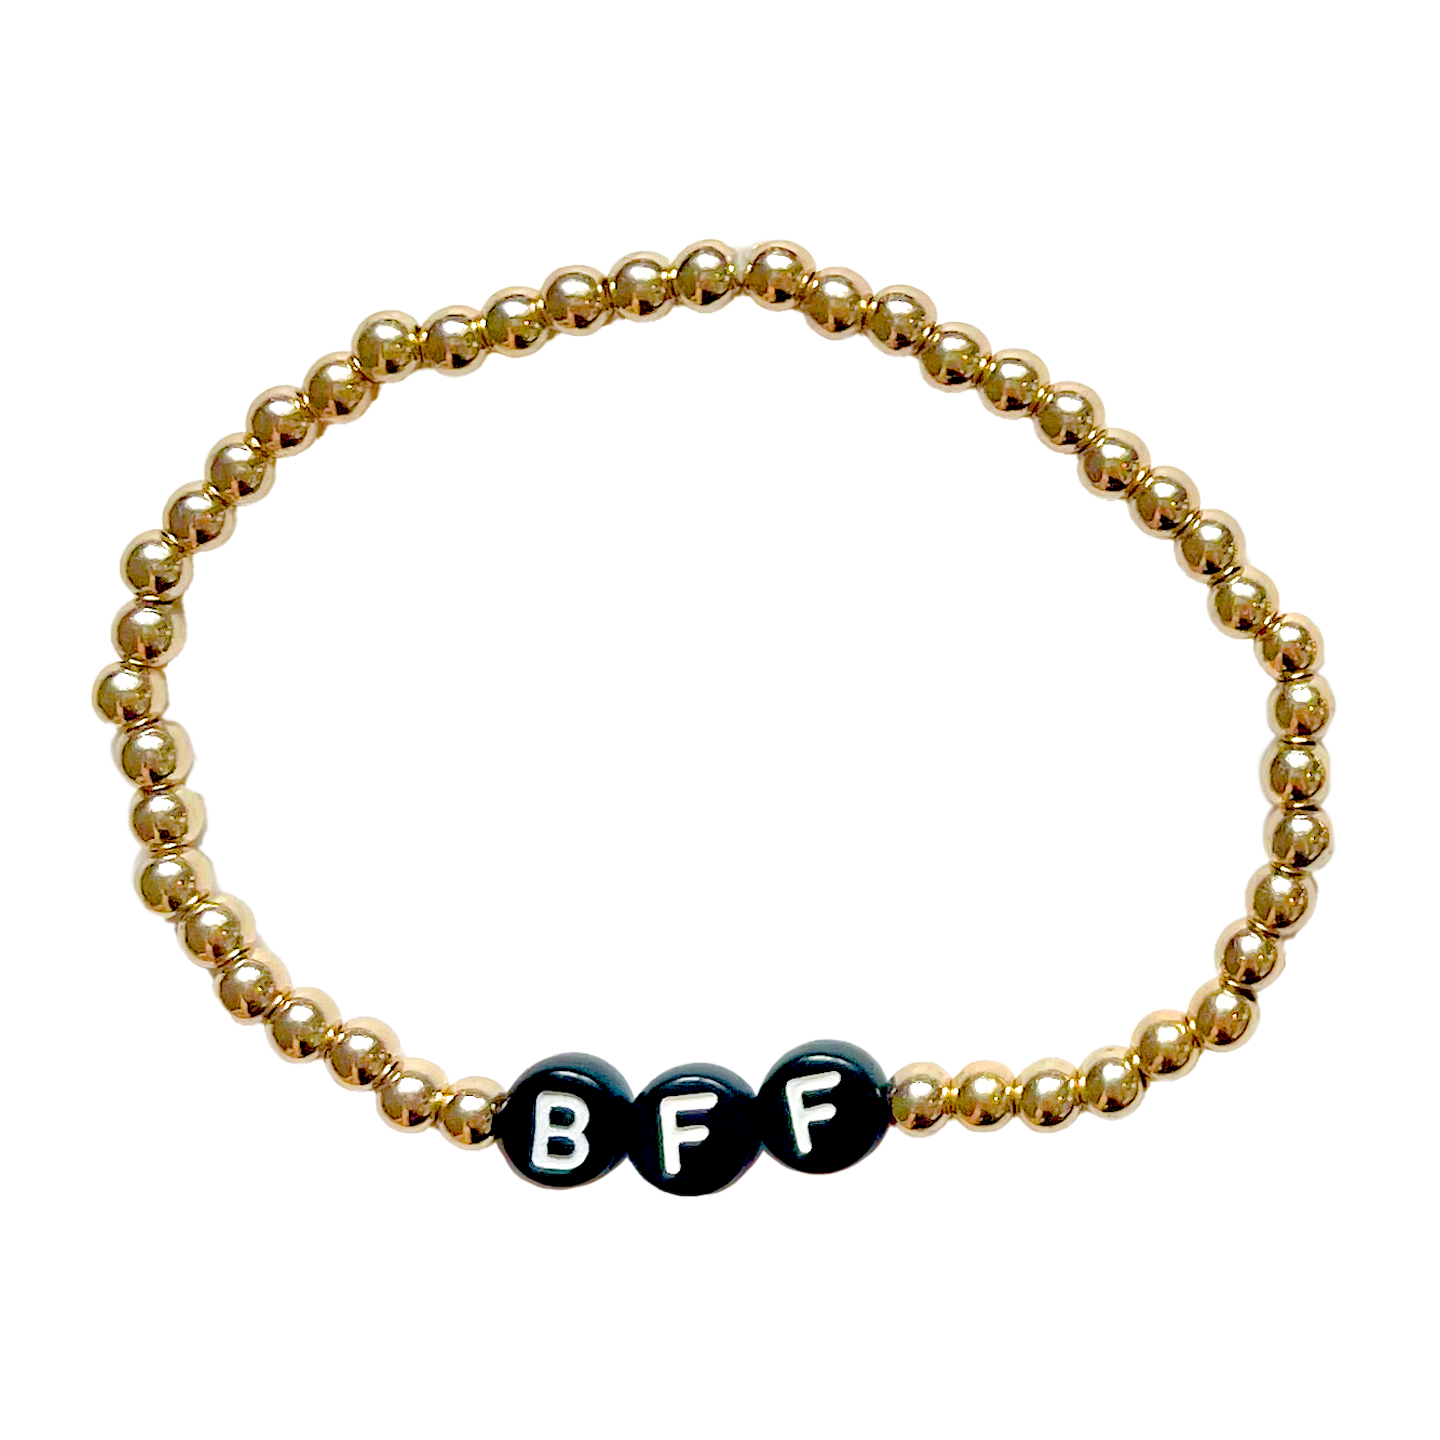 BFF Friendship Bracelet